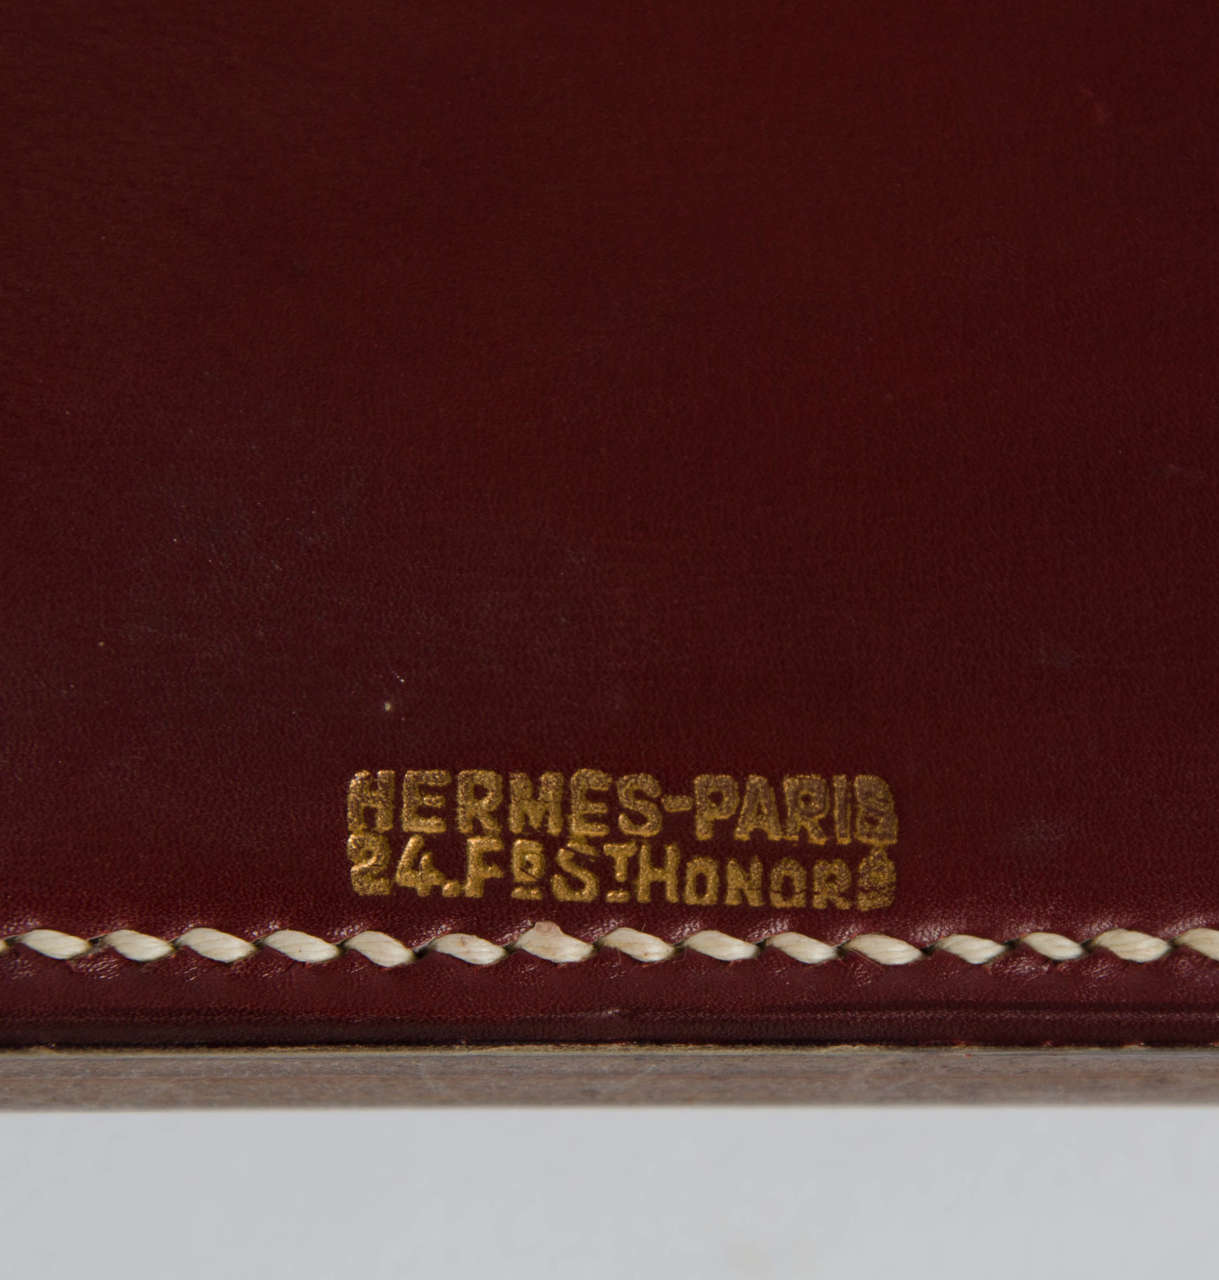 Nécessaire de Bureau by Paul Dupré-Lafon for Hermès 1